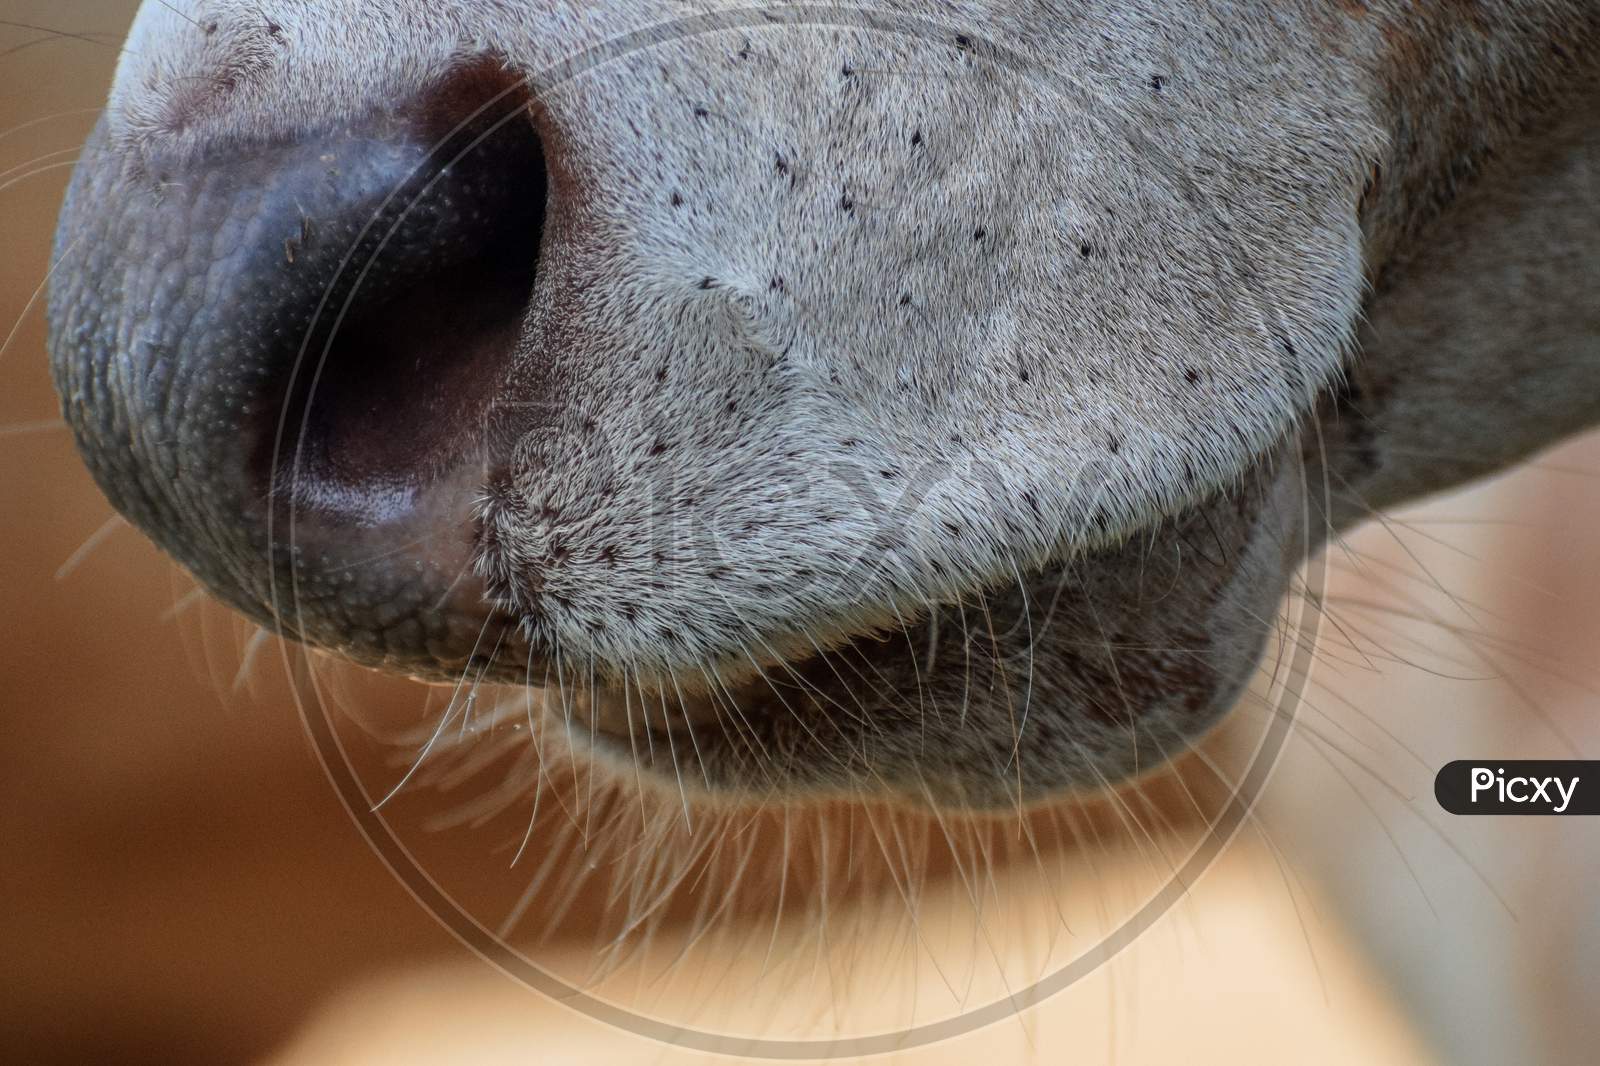 closeup of cow